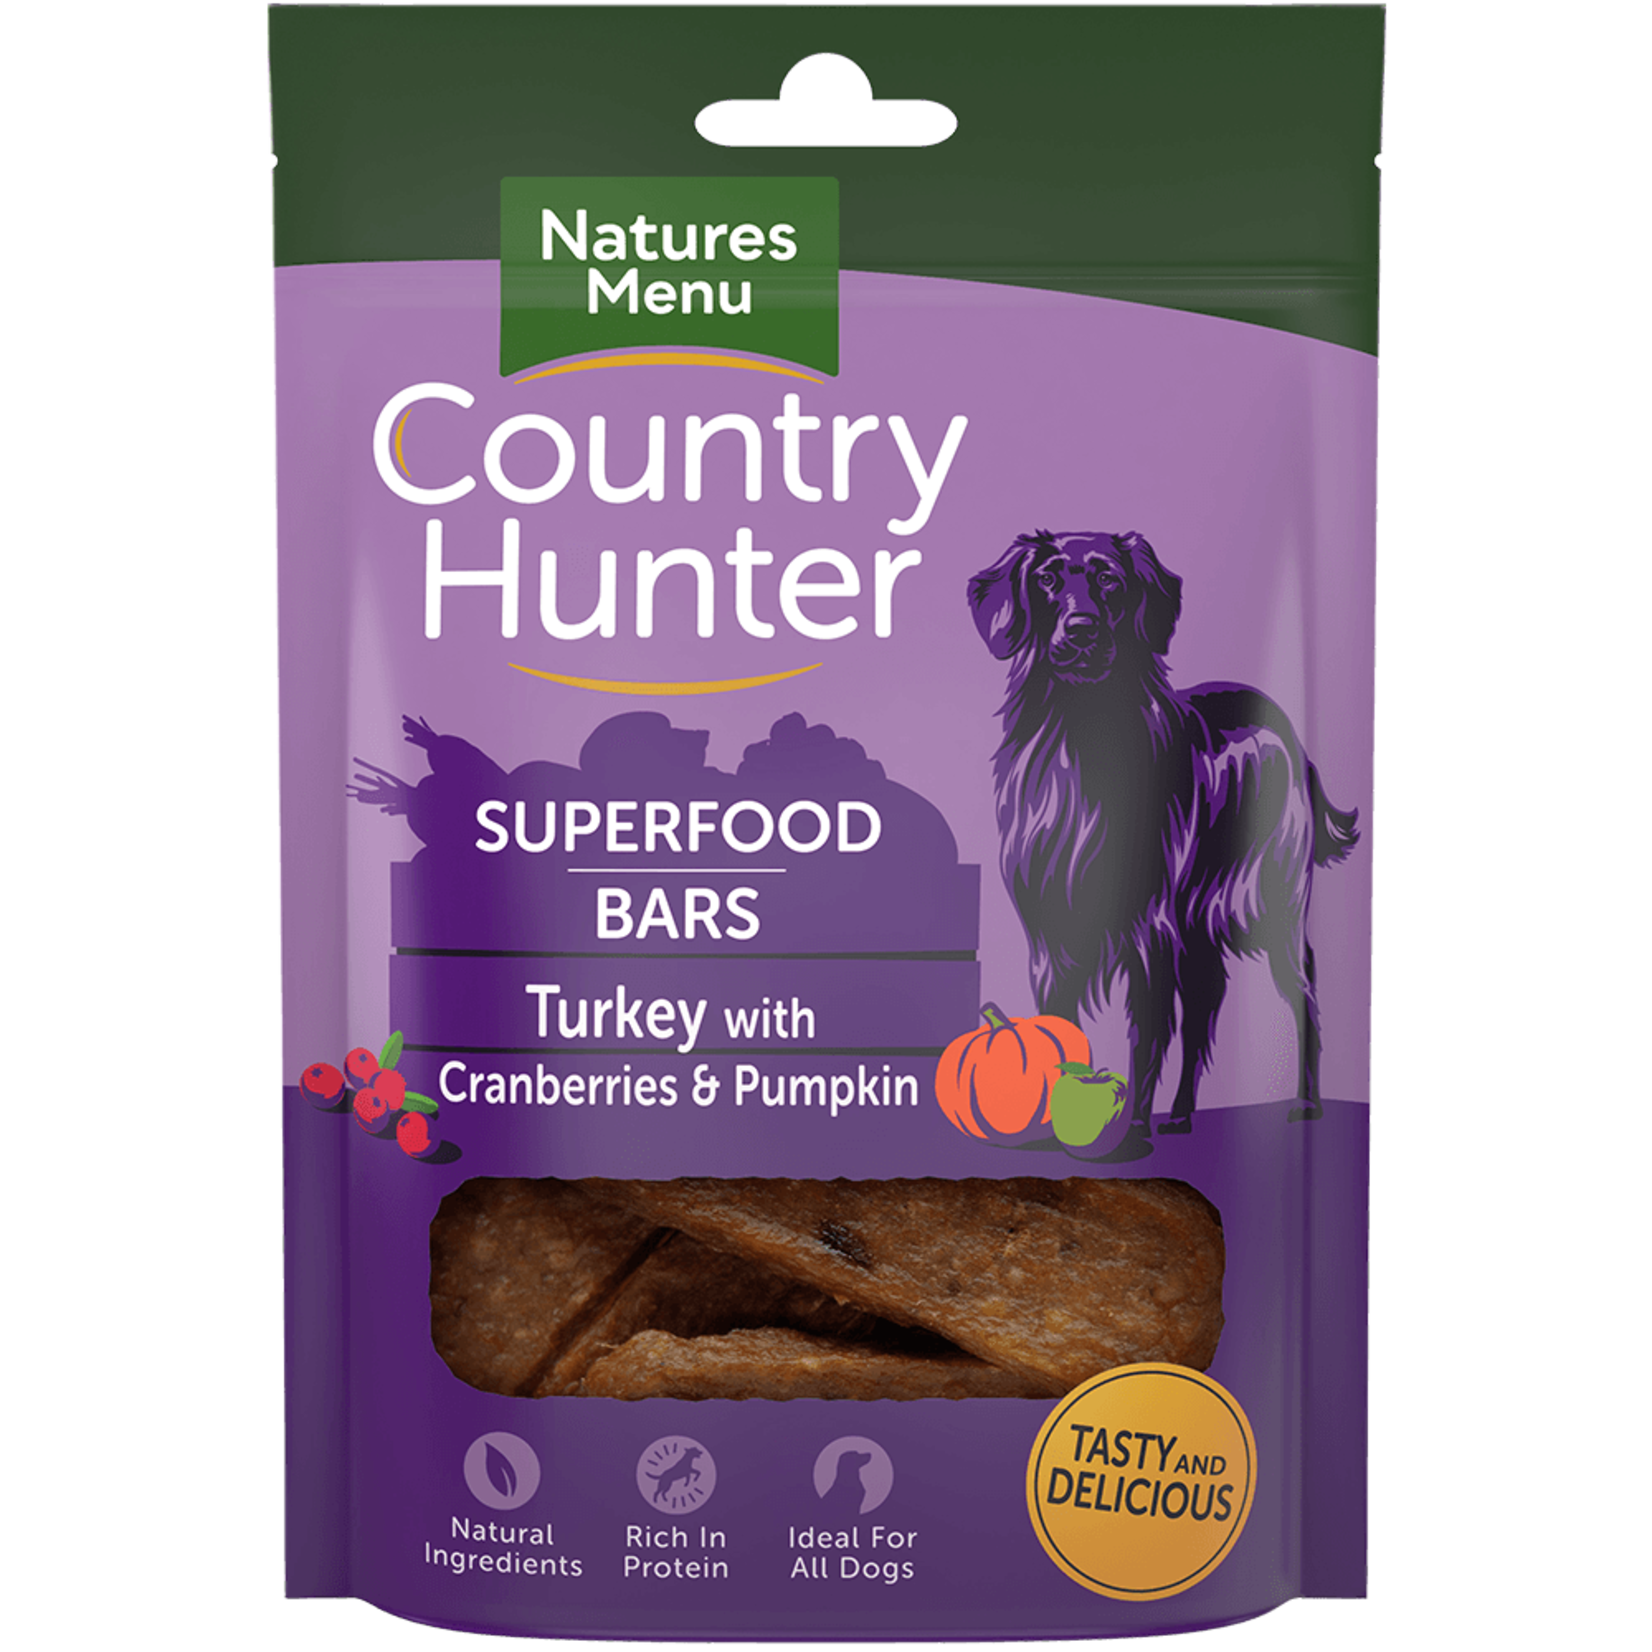 natures menu Country Hunter Superfood Bar Turkey with Cranberries & Pumpkin Dog Treat, 100g